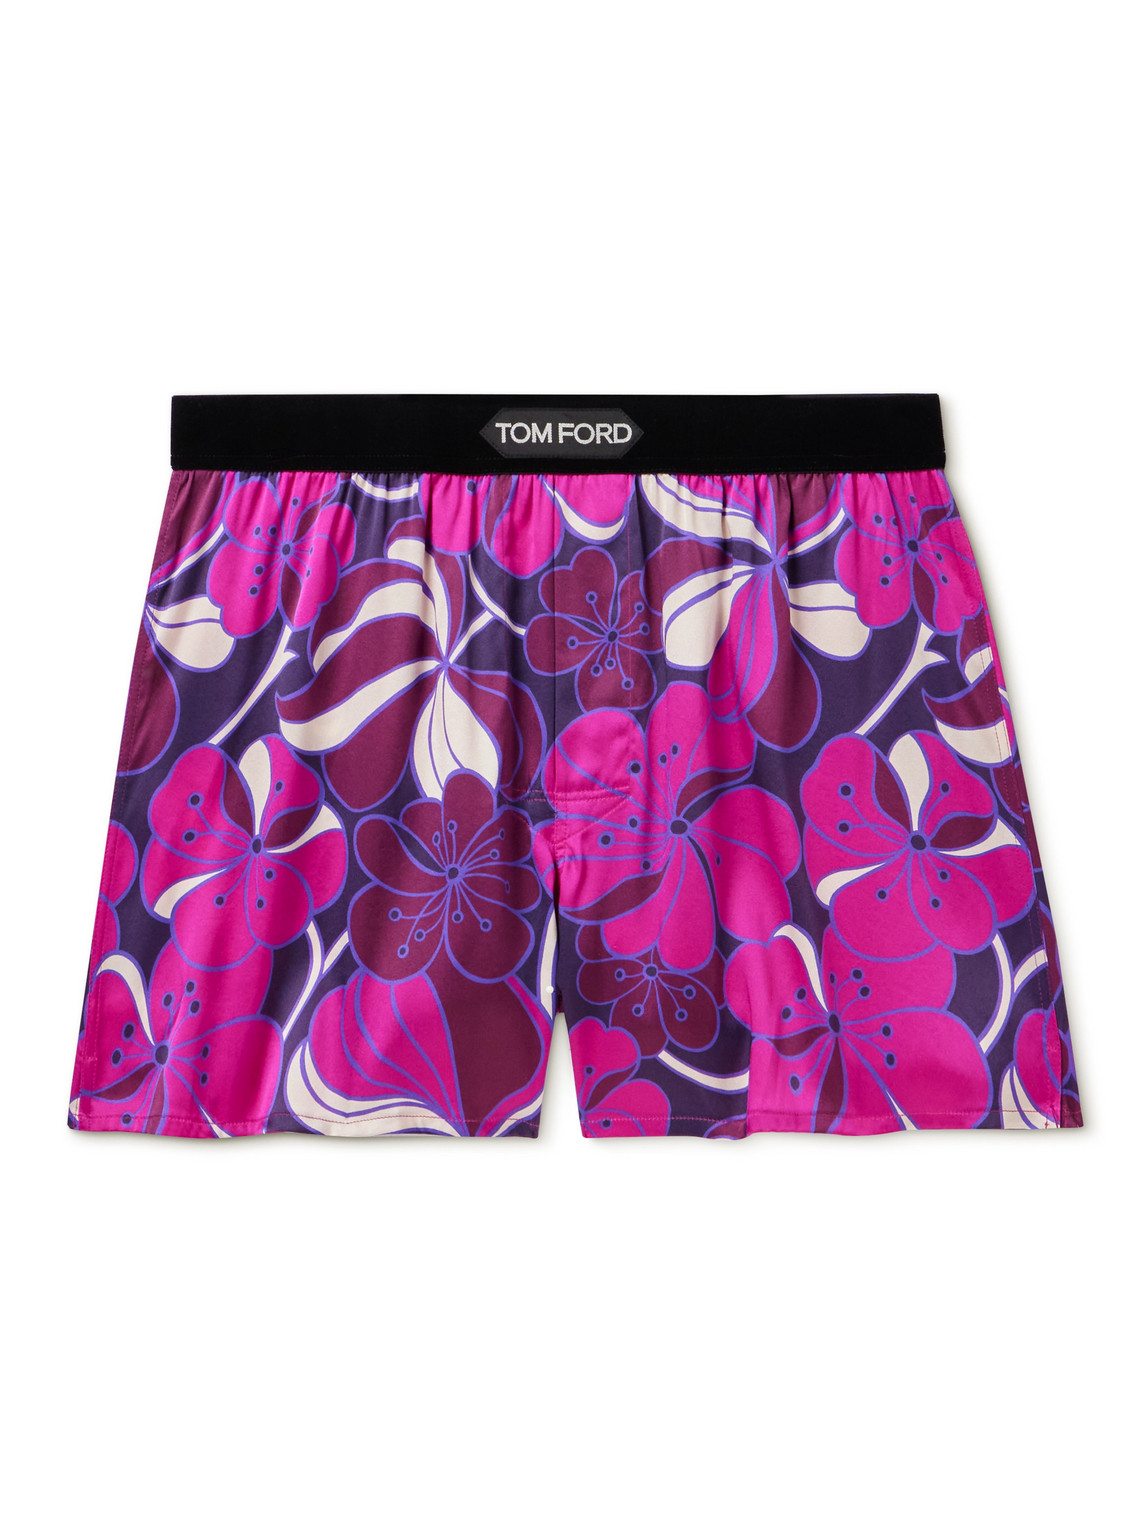 TOM FORD - Floral-Print Velvet-Trimmed Stretch-Silk Satin Boxer Shorts - Men - Purple - L von TOM FORD